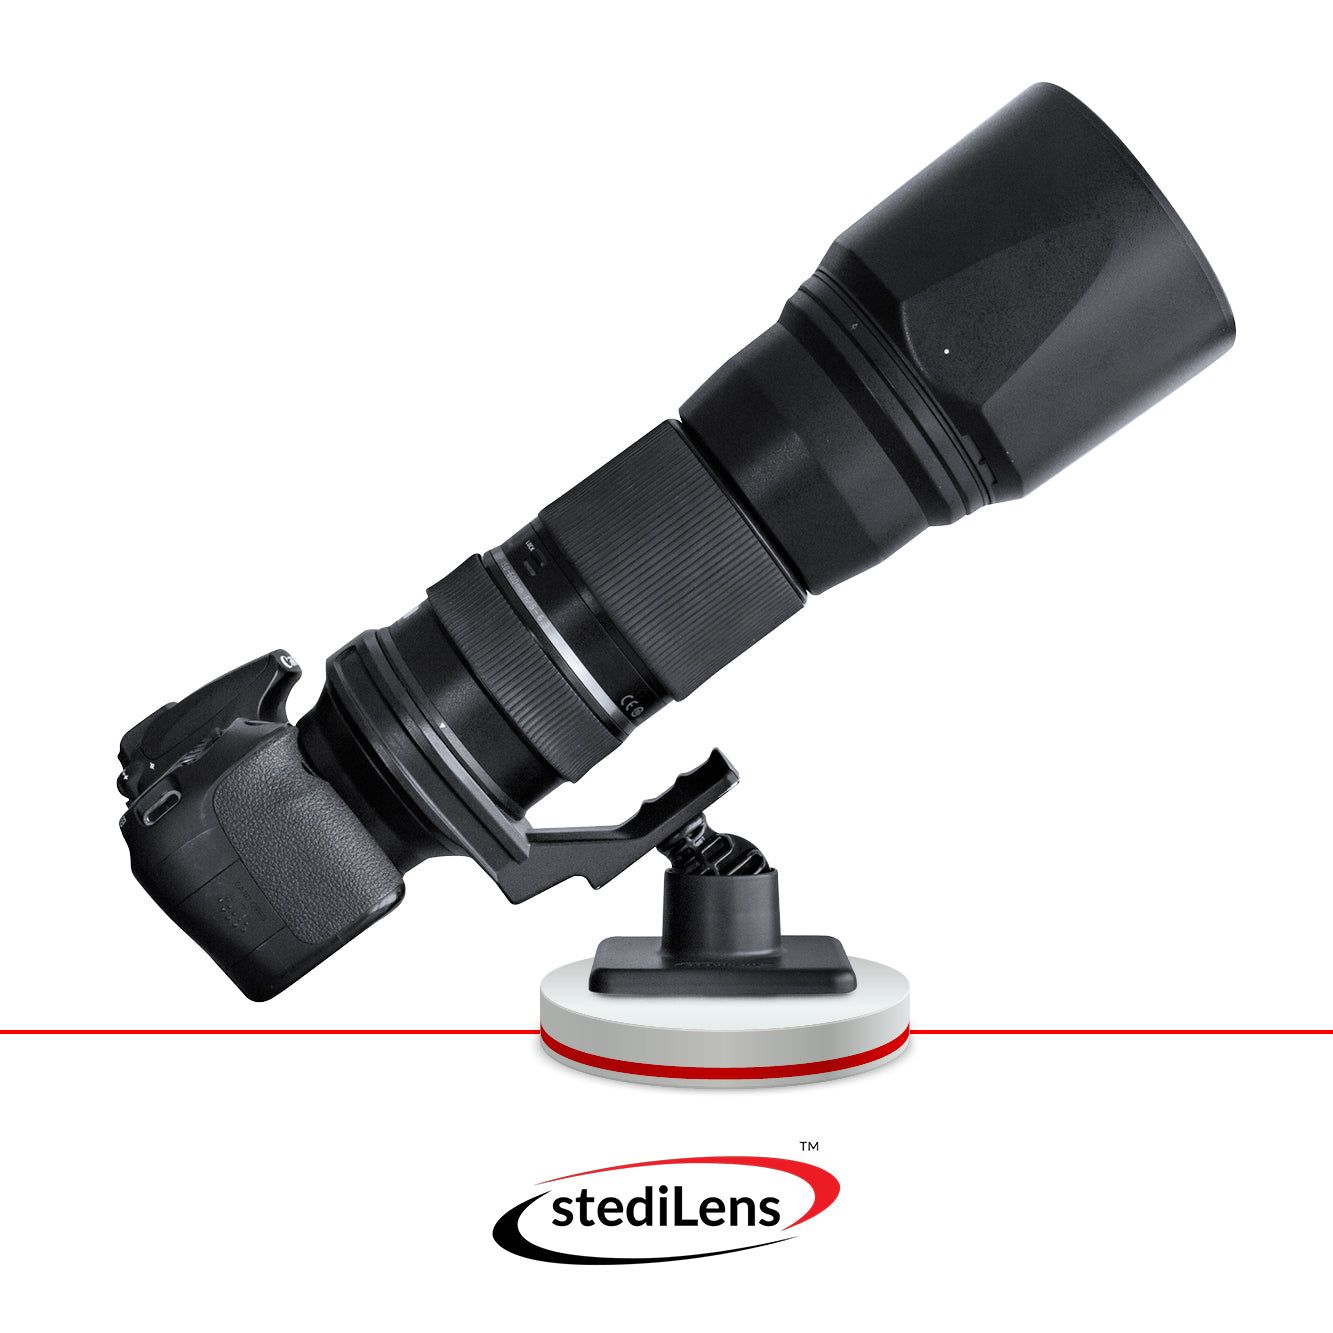 StediLens Base Unit Camera tek